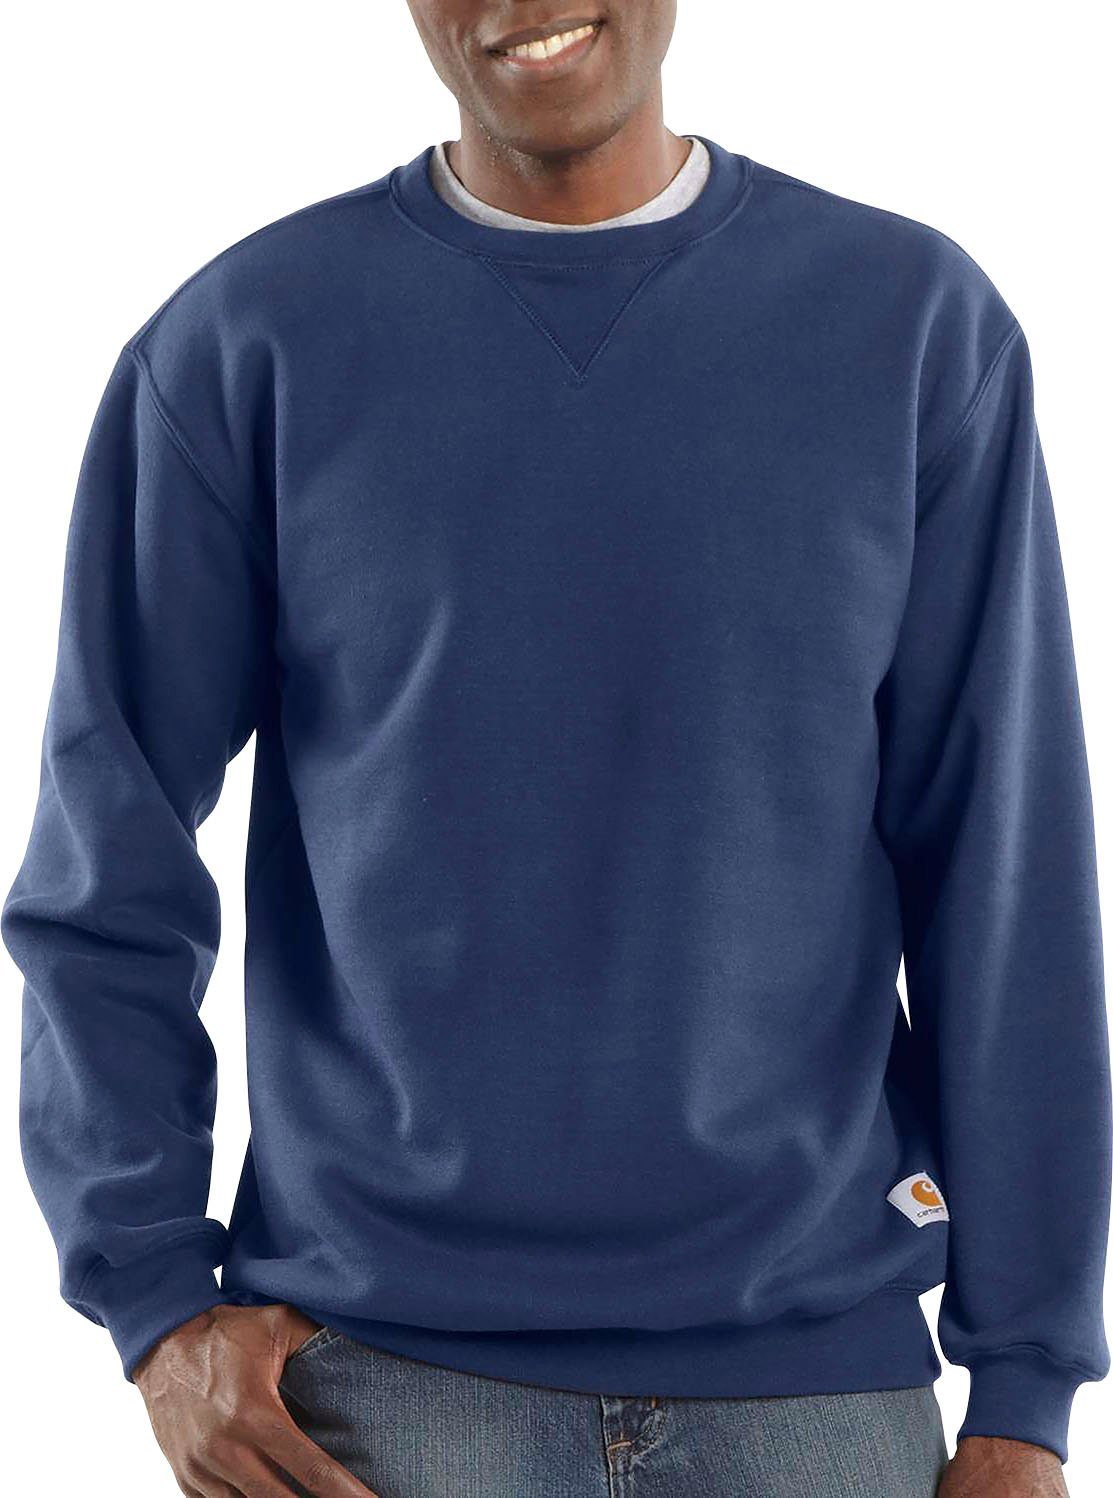 K124 Carhartt navy Sweatshirt